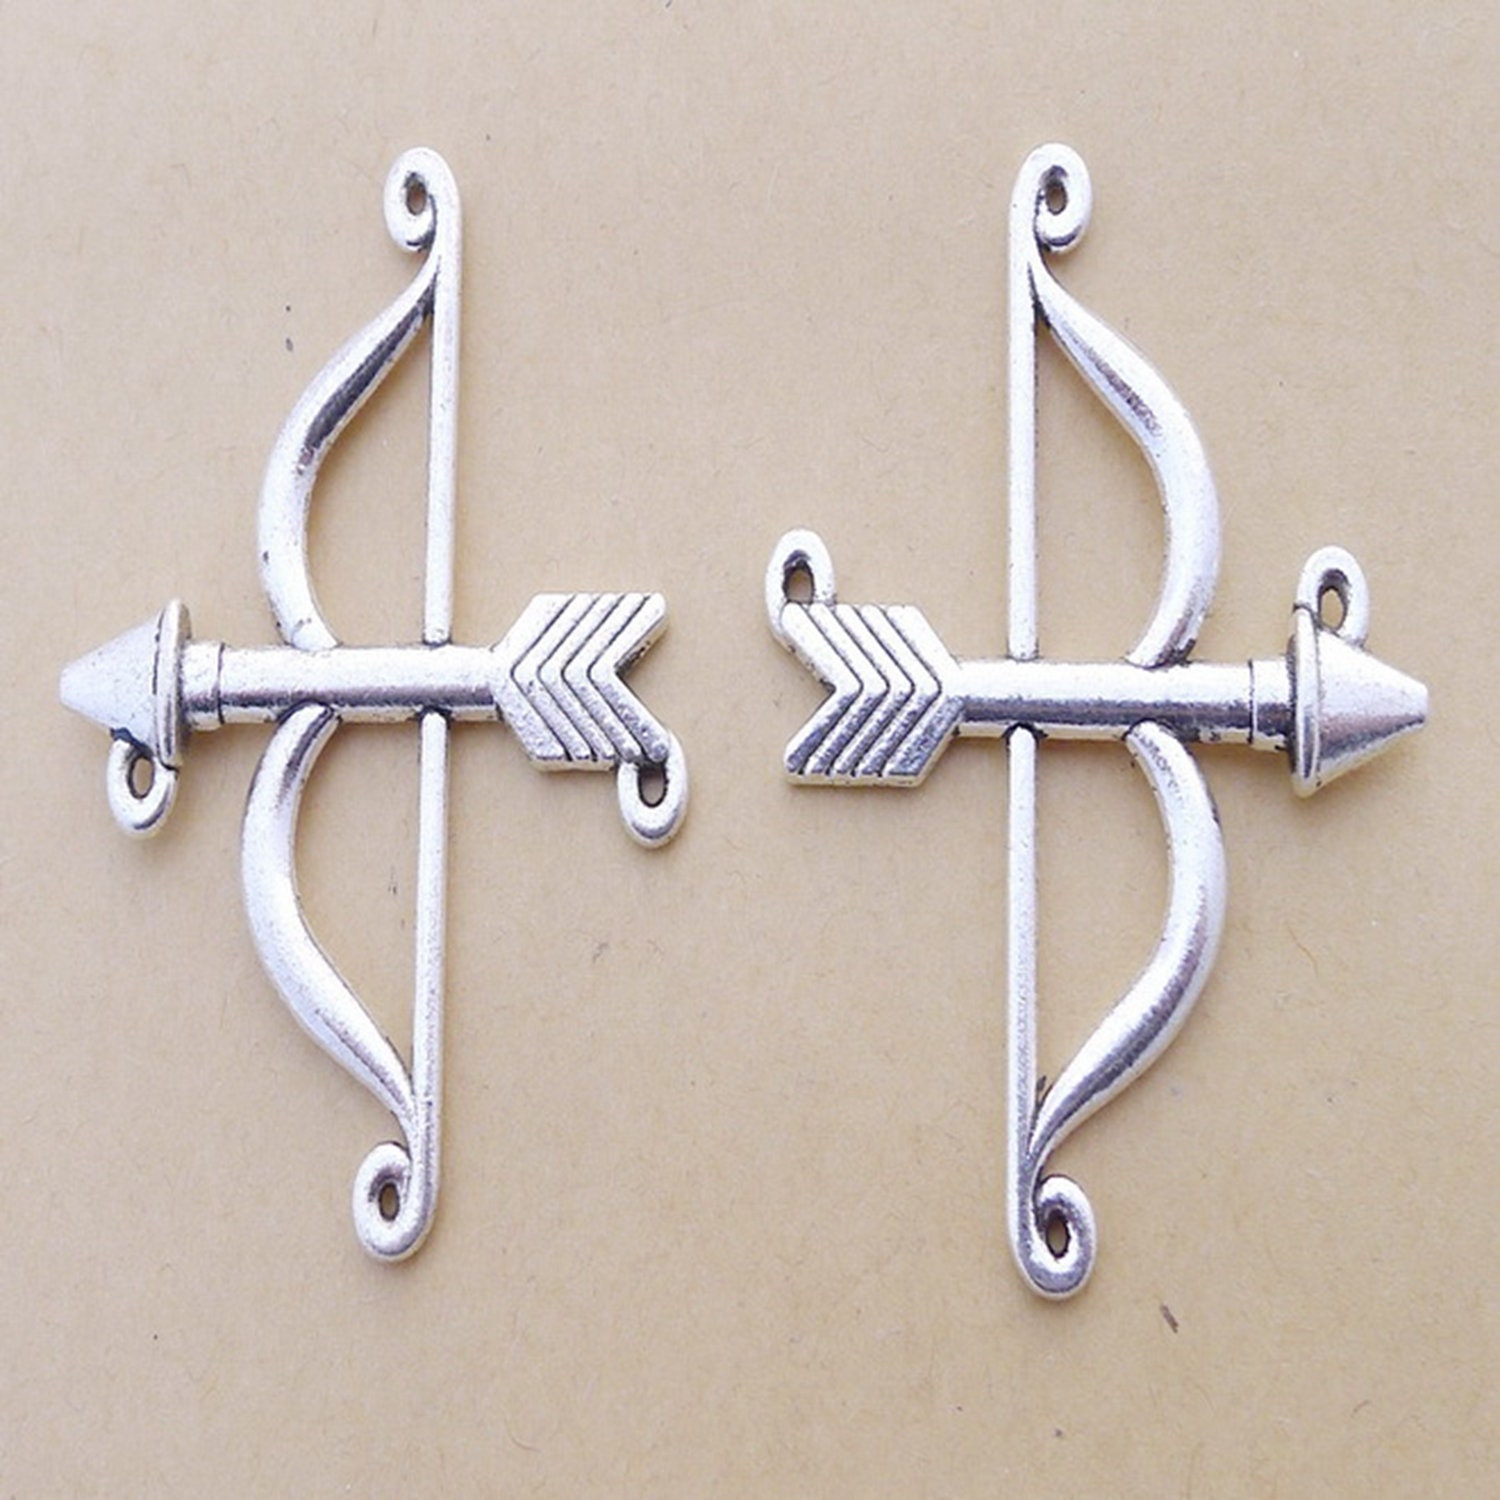 Bow and Arrow Charms / Archery Charm / Crossbow Charm (4pcs / 24mm x 35mm / Tibetan Silver) Cupid Charm Bracelet Sports Zipper Pull CHM978